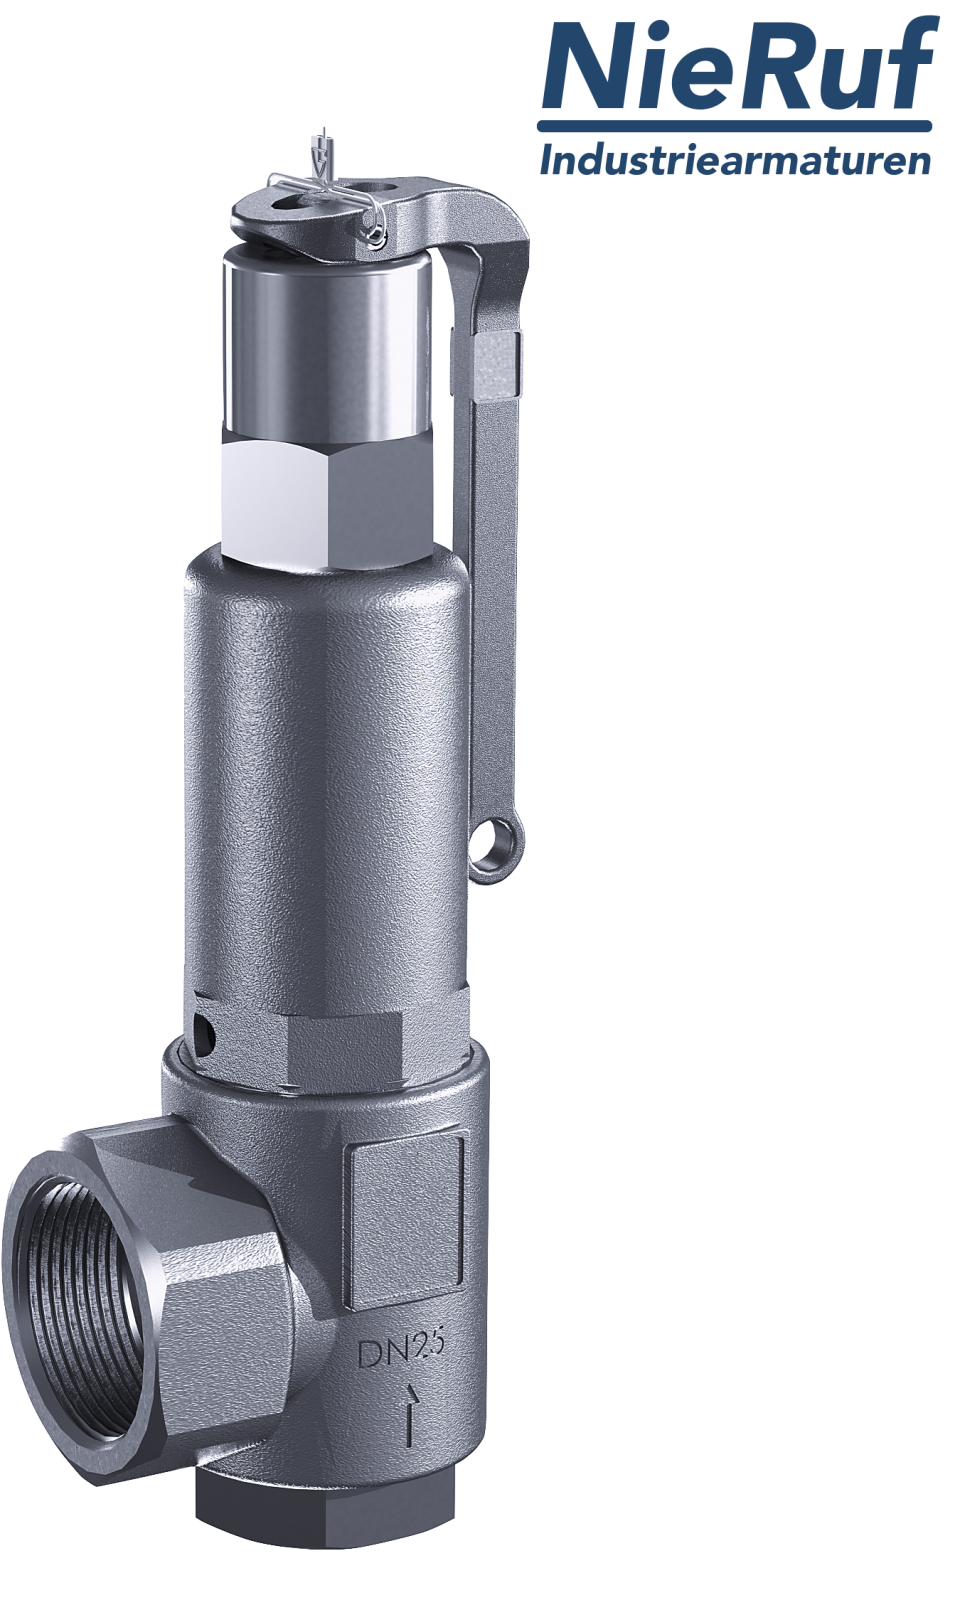 safety valve 3/4" x 1 1/4" fm SV05 neutral liquid media, stainless steel FKM, with lever